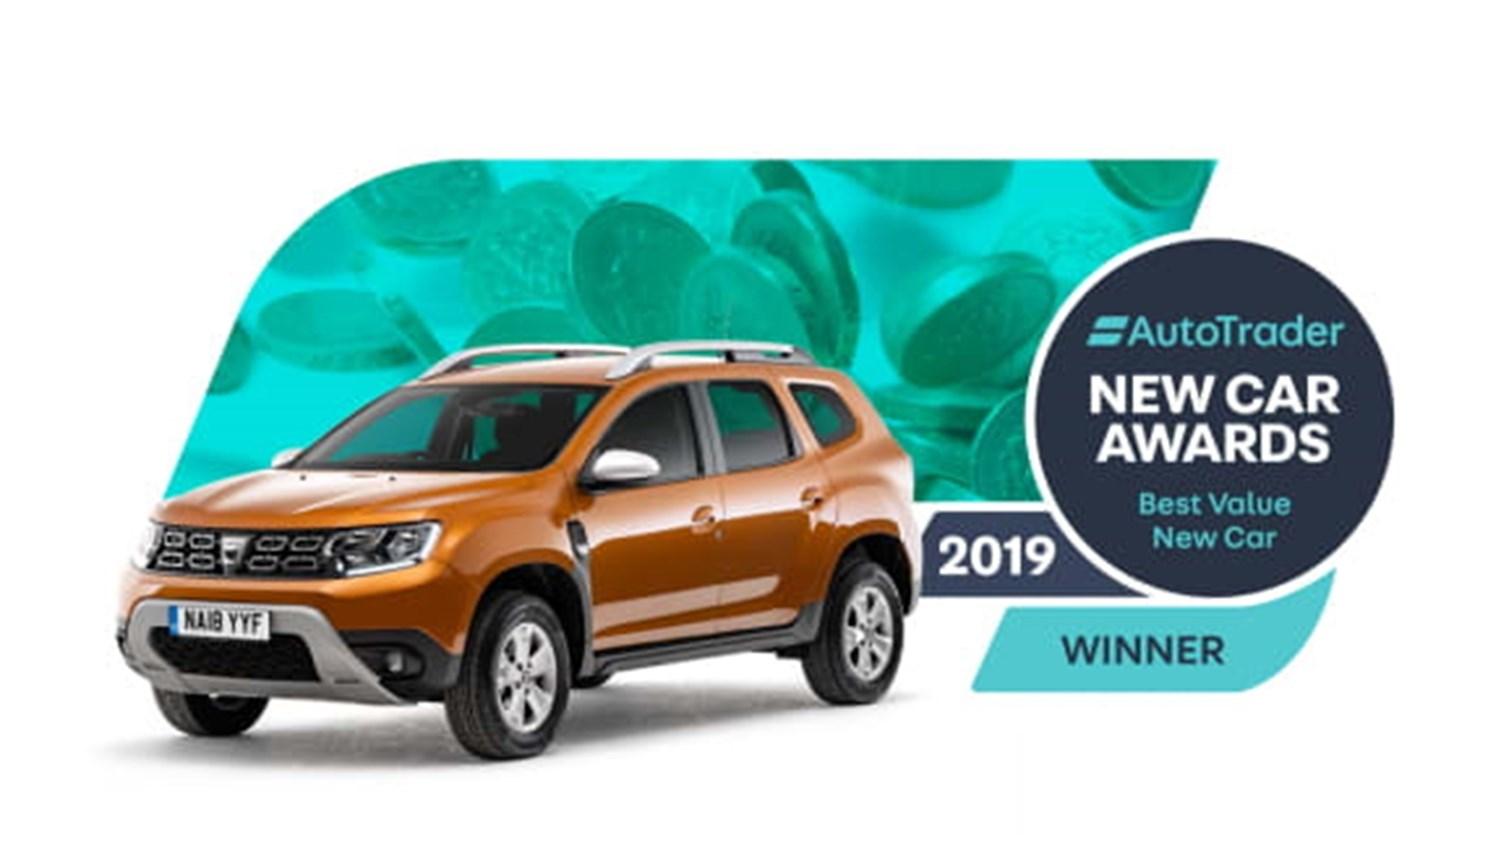 Double win for Dacia at Auto Trader New Car Awards 2019